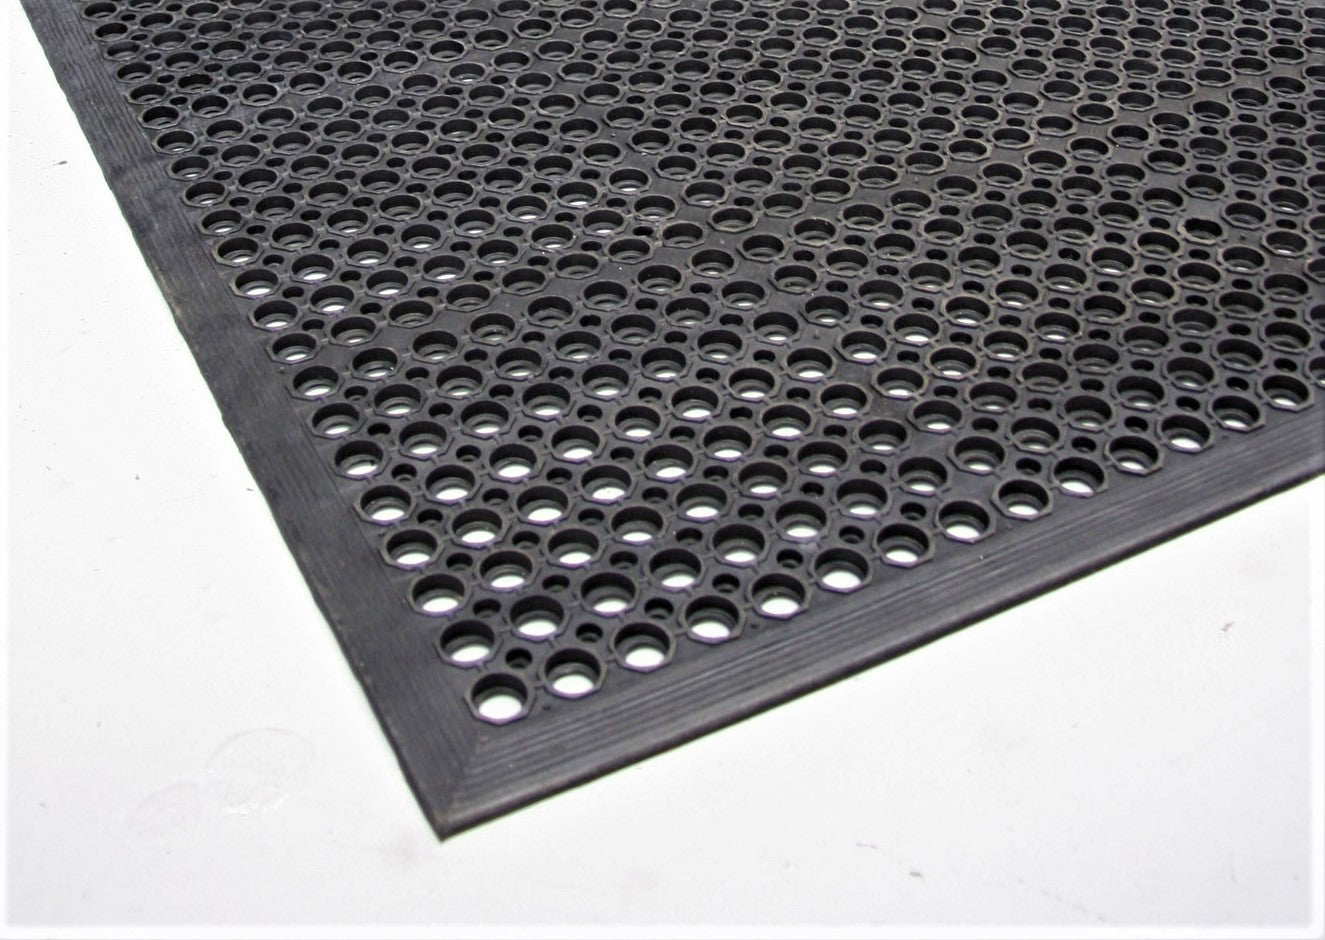 Rubber Flooring 3mm Thick Garage Floor Mat Waterproof Anti Slip 4 Styles